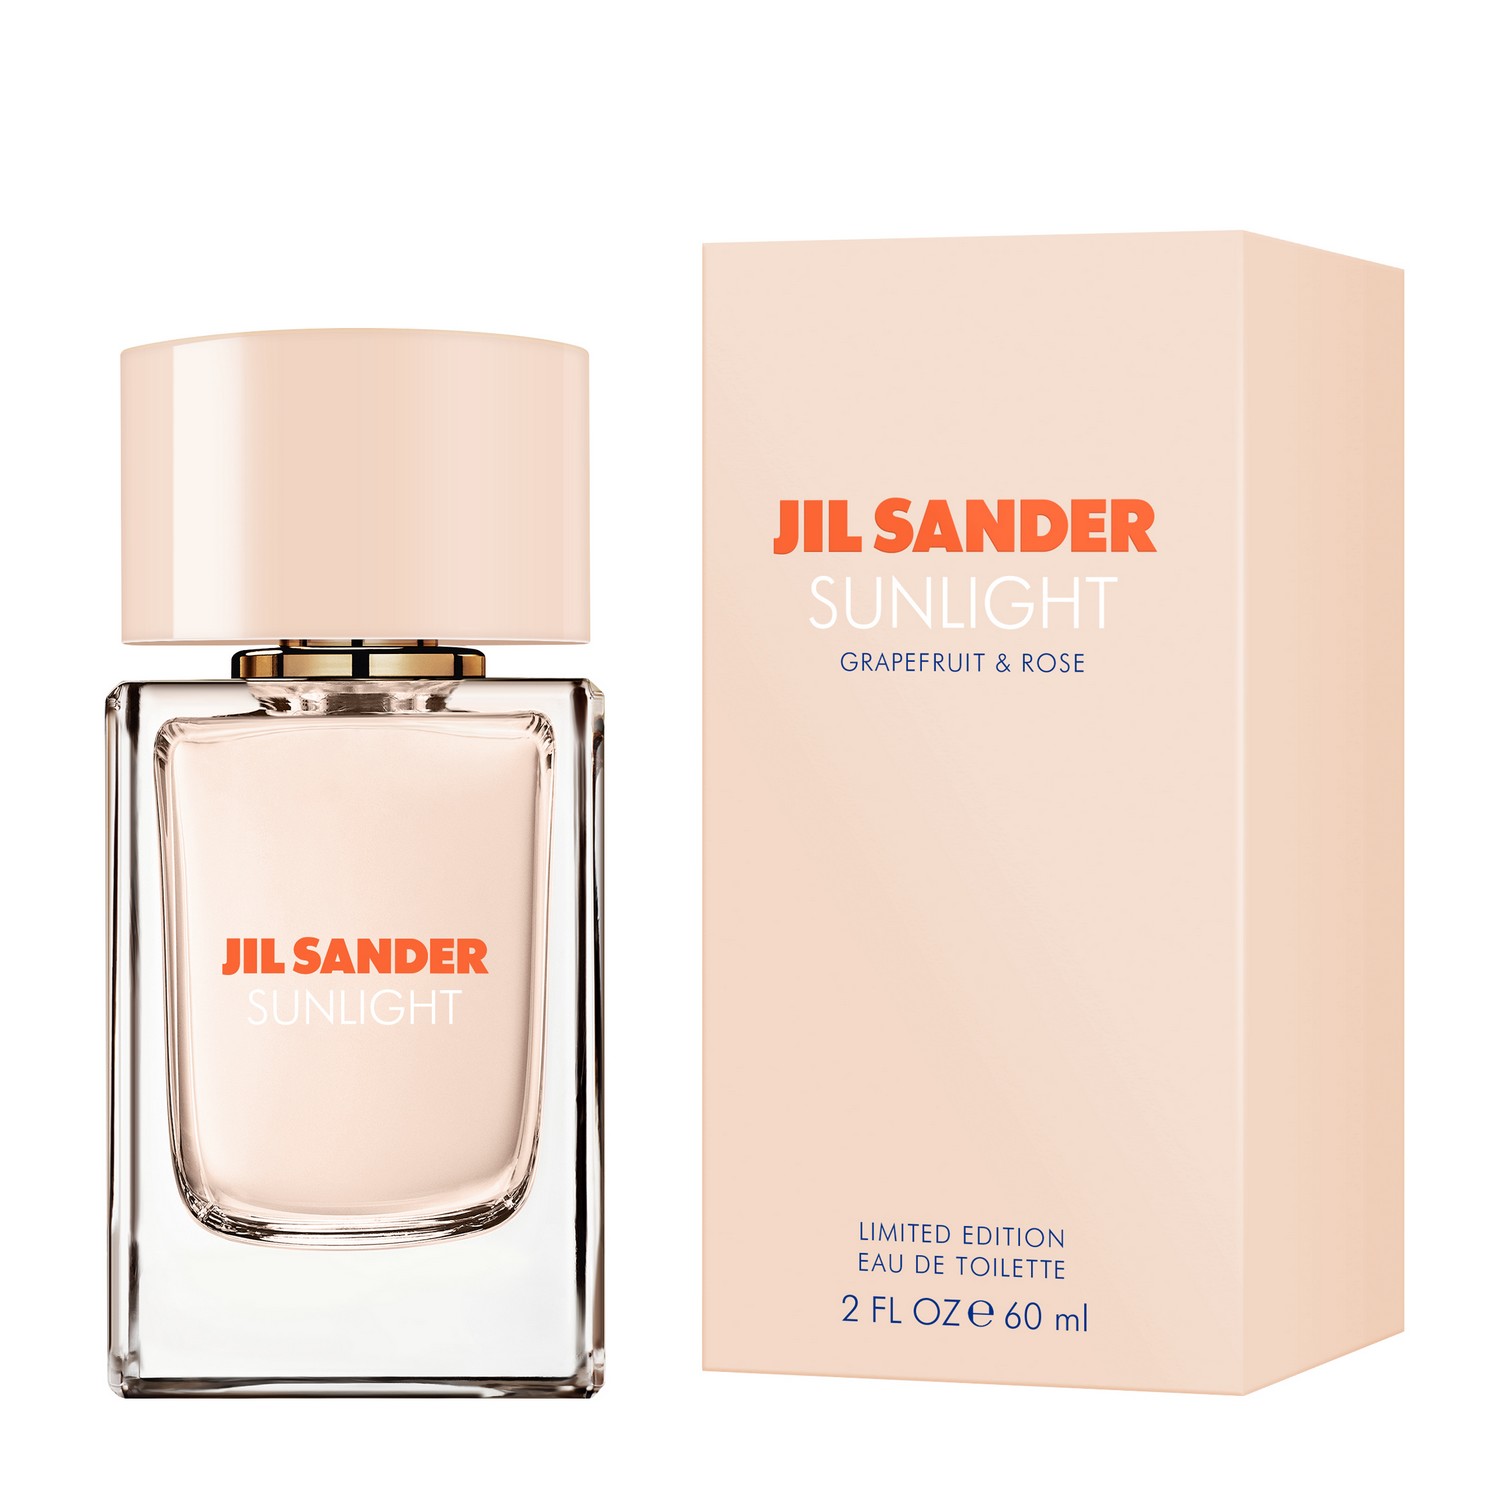 Jil Sander Sunlight Grapefruit & Rose Summer Edition Eau de Toilette 60ml